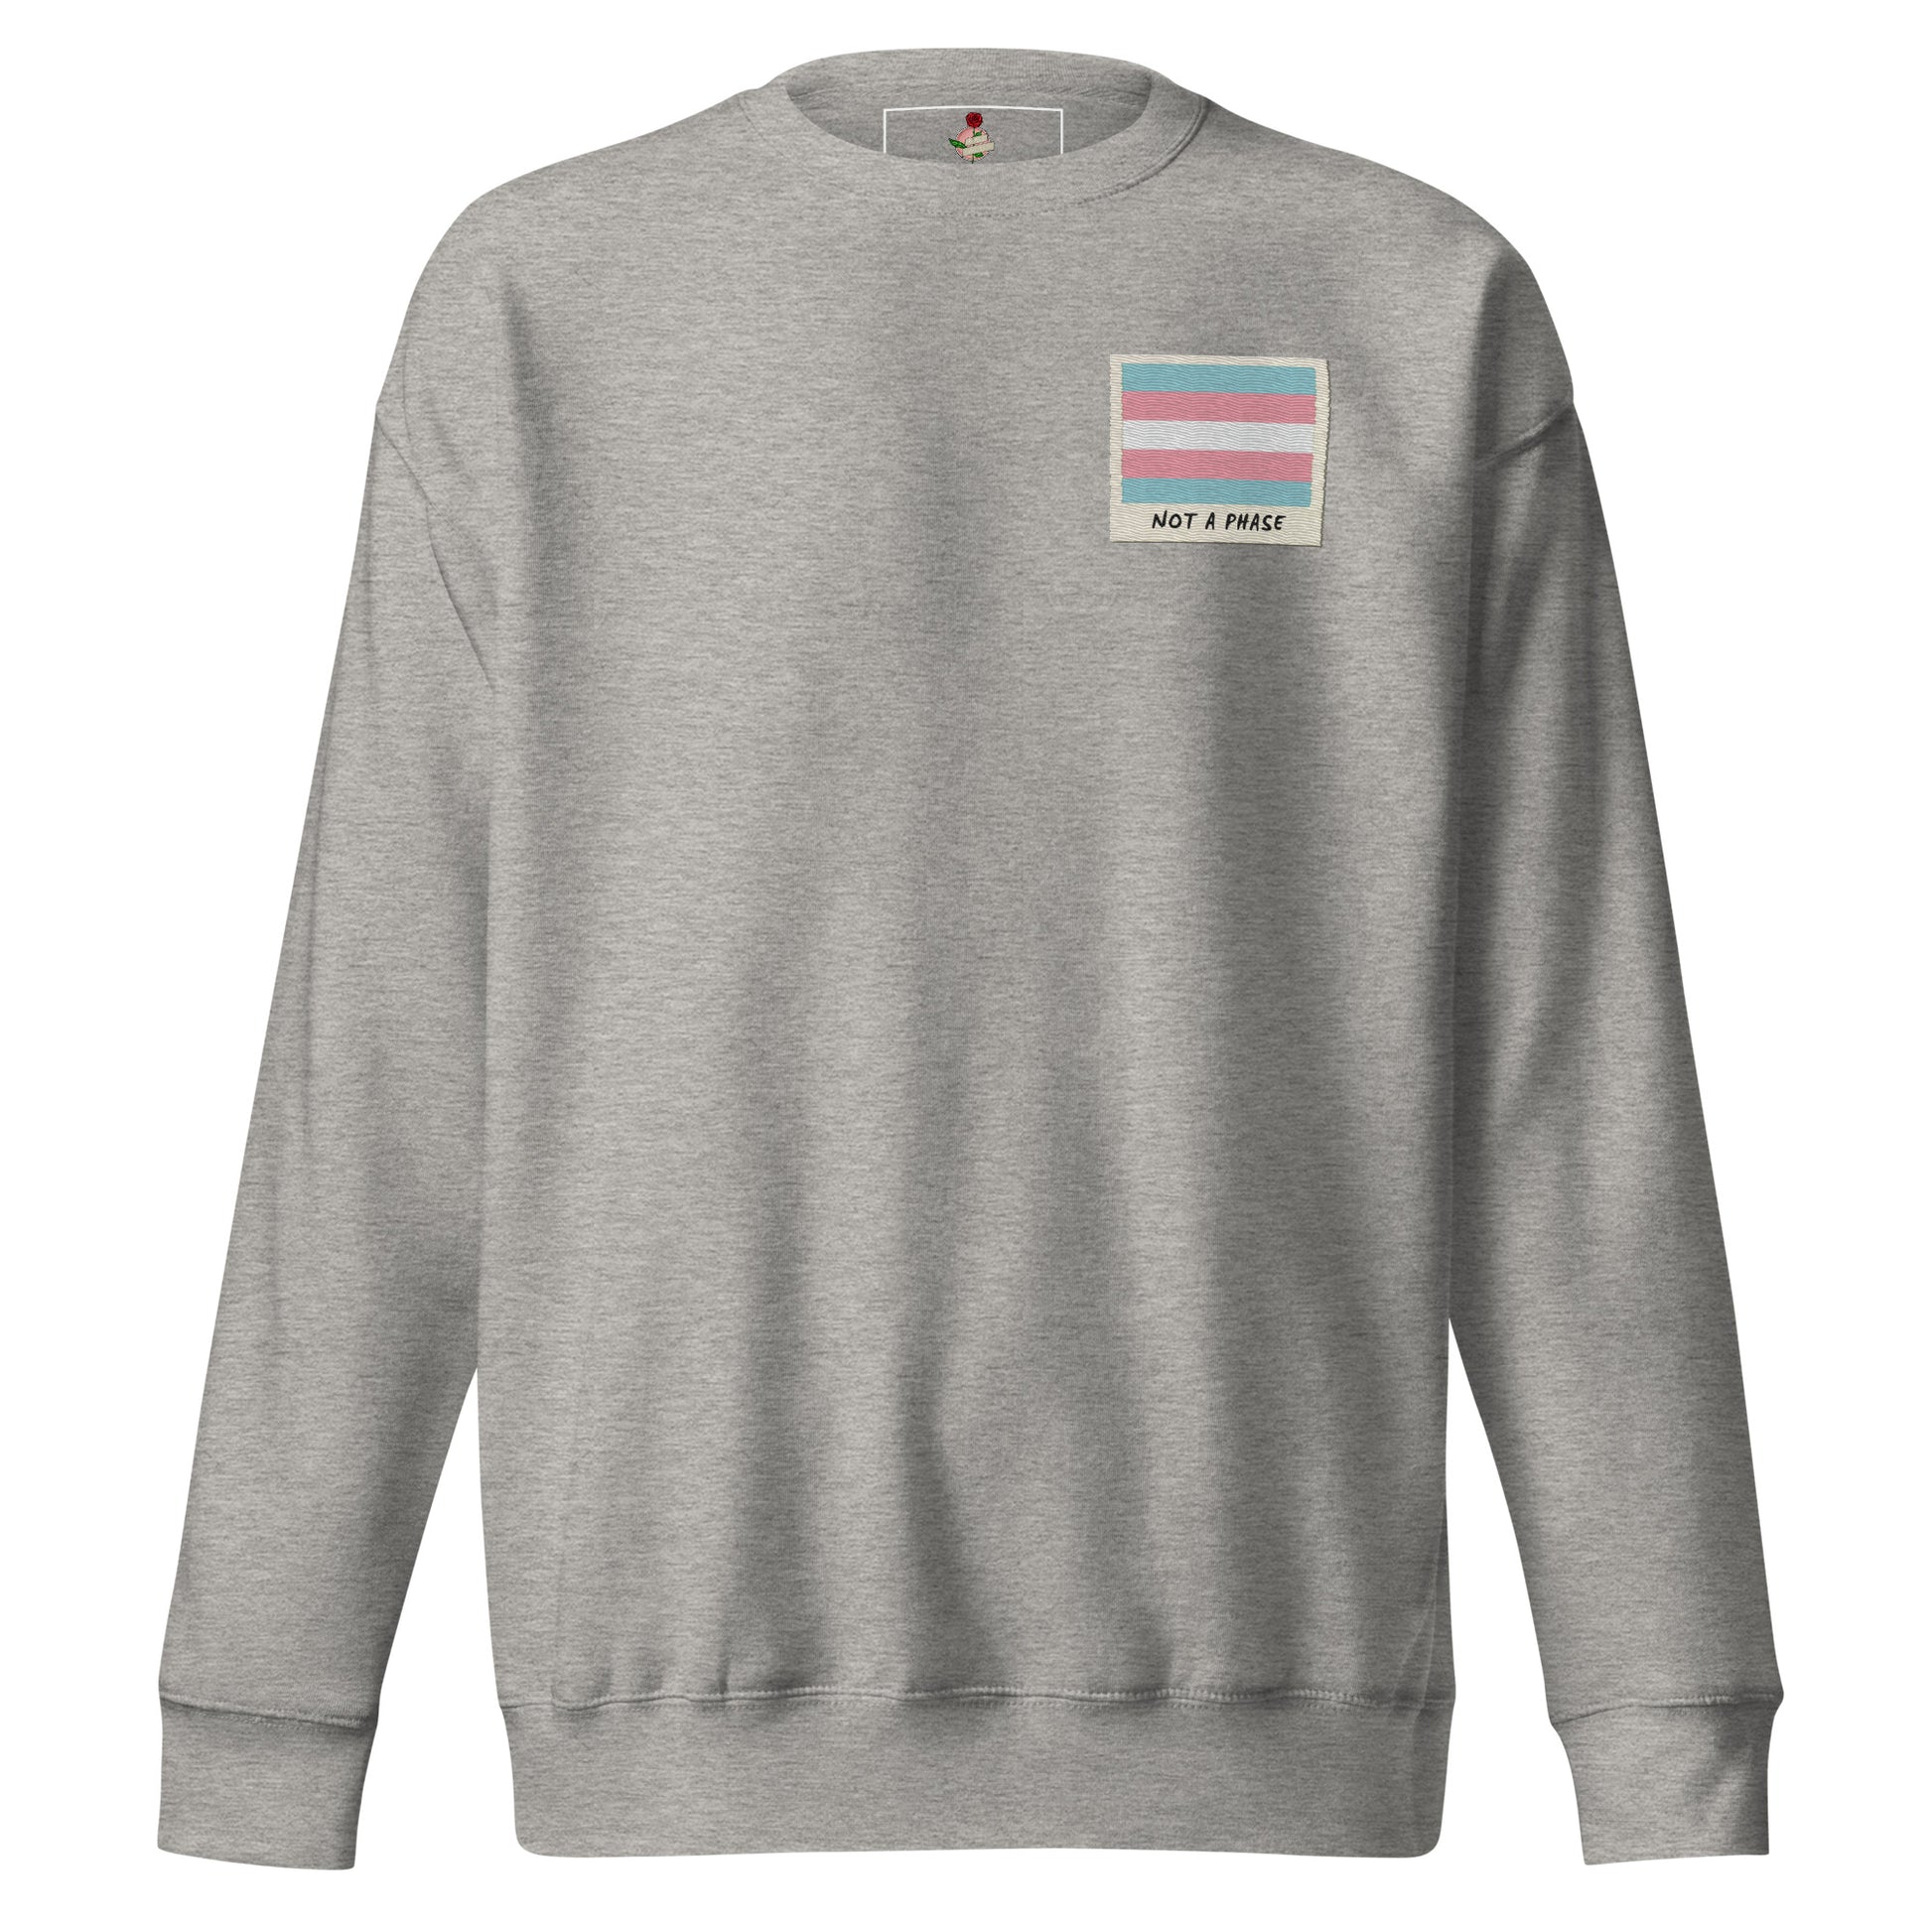 Unisex Premium Sweatshirt - Rose Gold Co. Shop